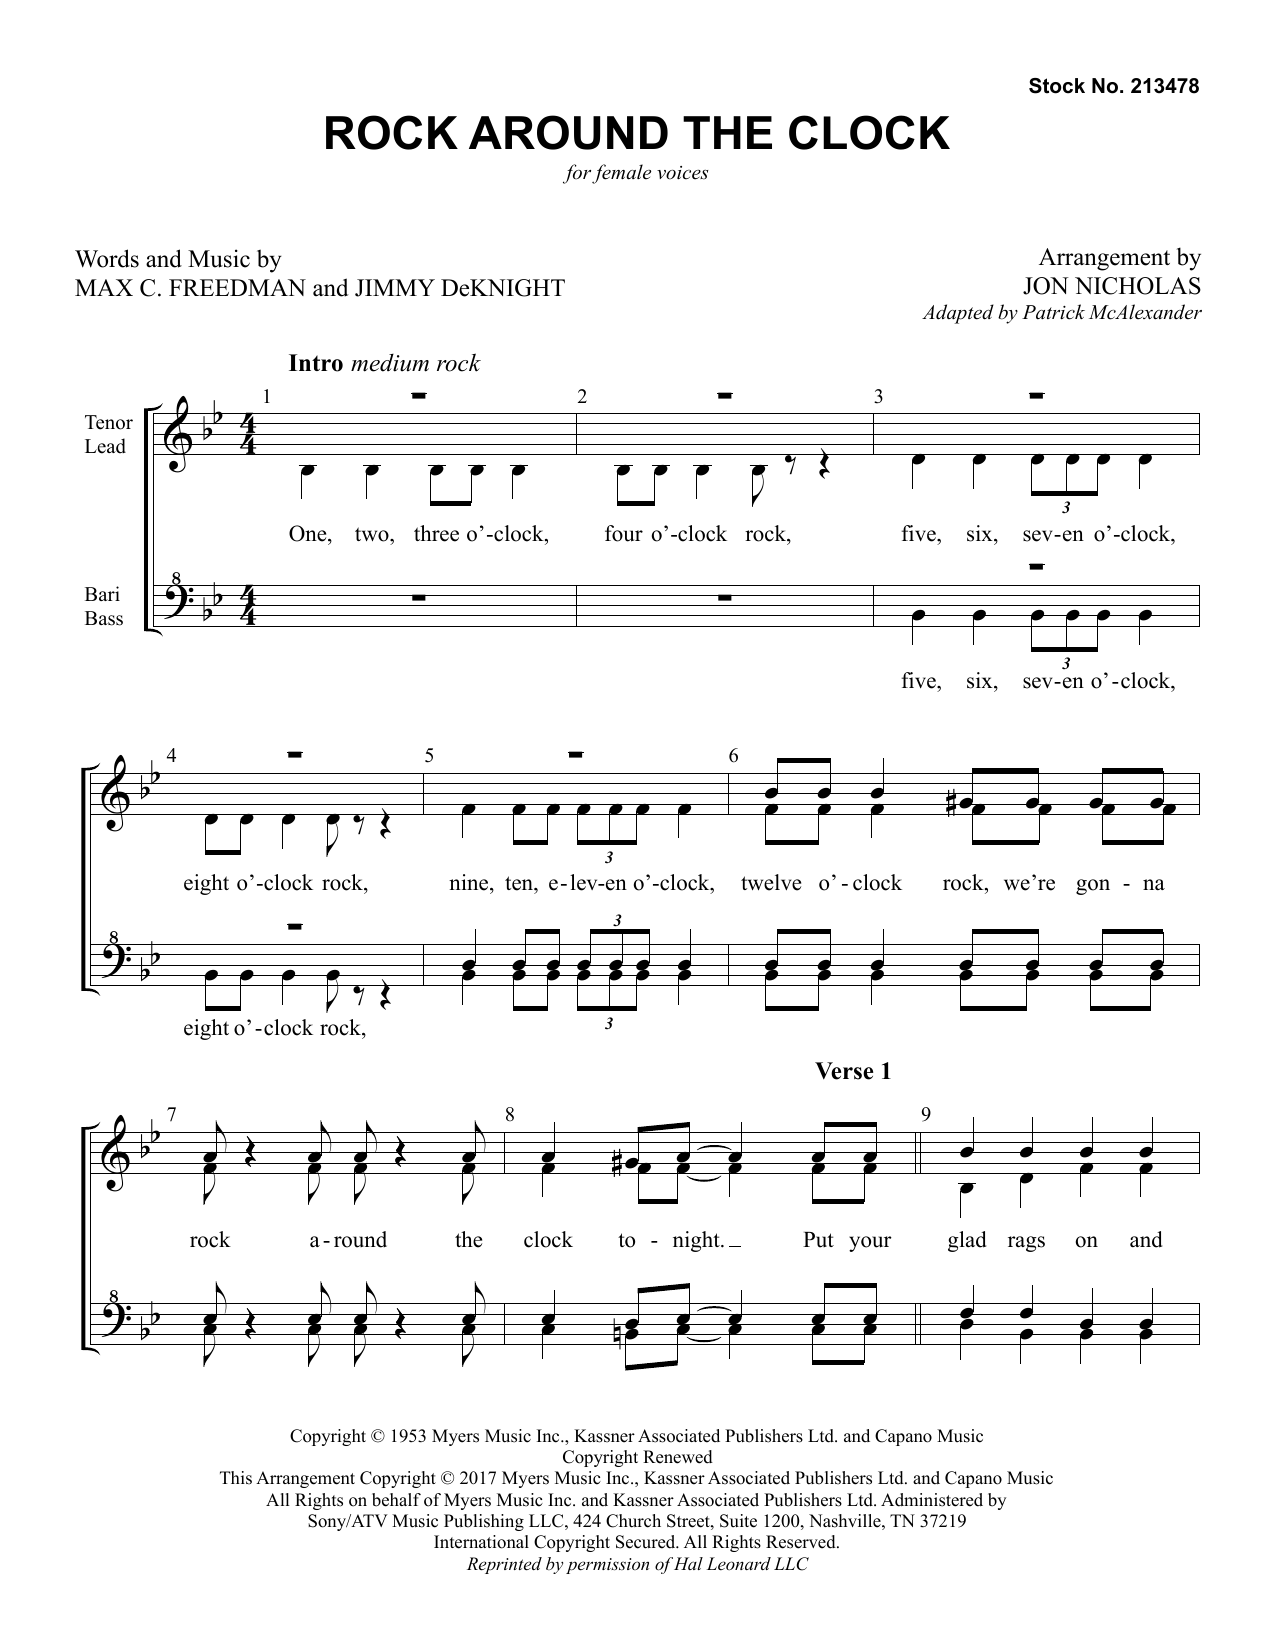 Max C. Freedman & Jimmy DeKnight Rock Around The Clock (arr. Jon Nicholas) Sheet Music Notes & Chords for TTBB Choir - Download or Print PDF